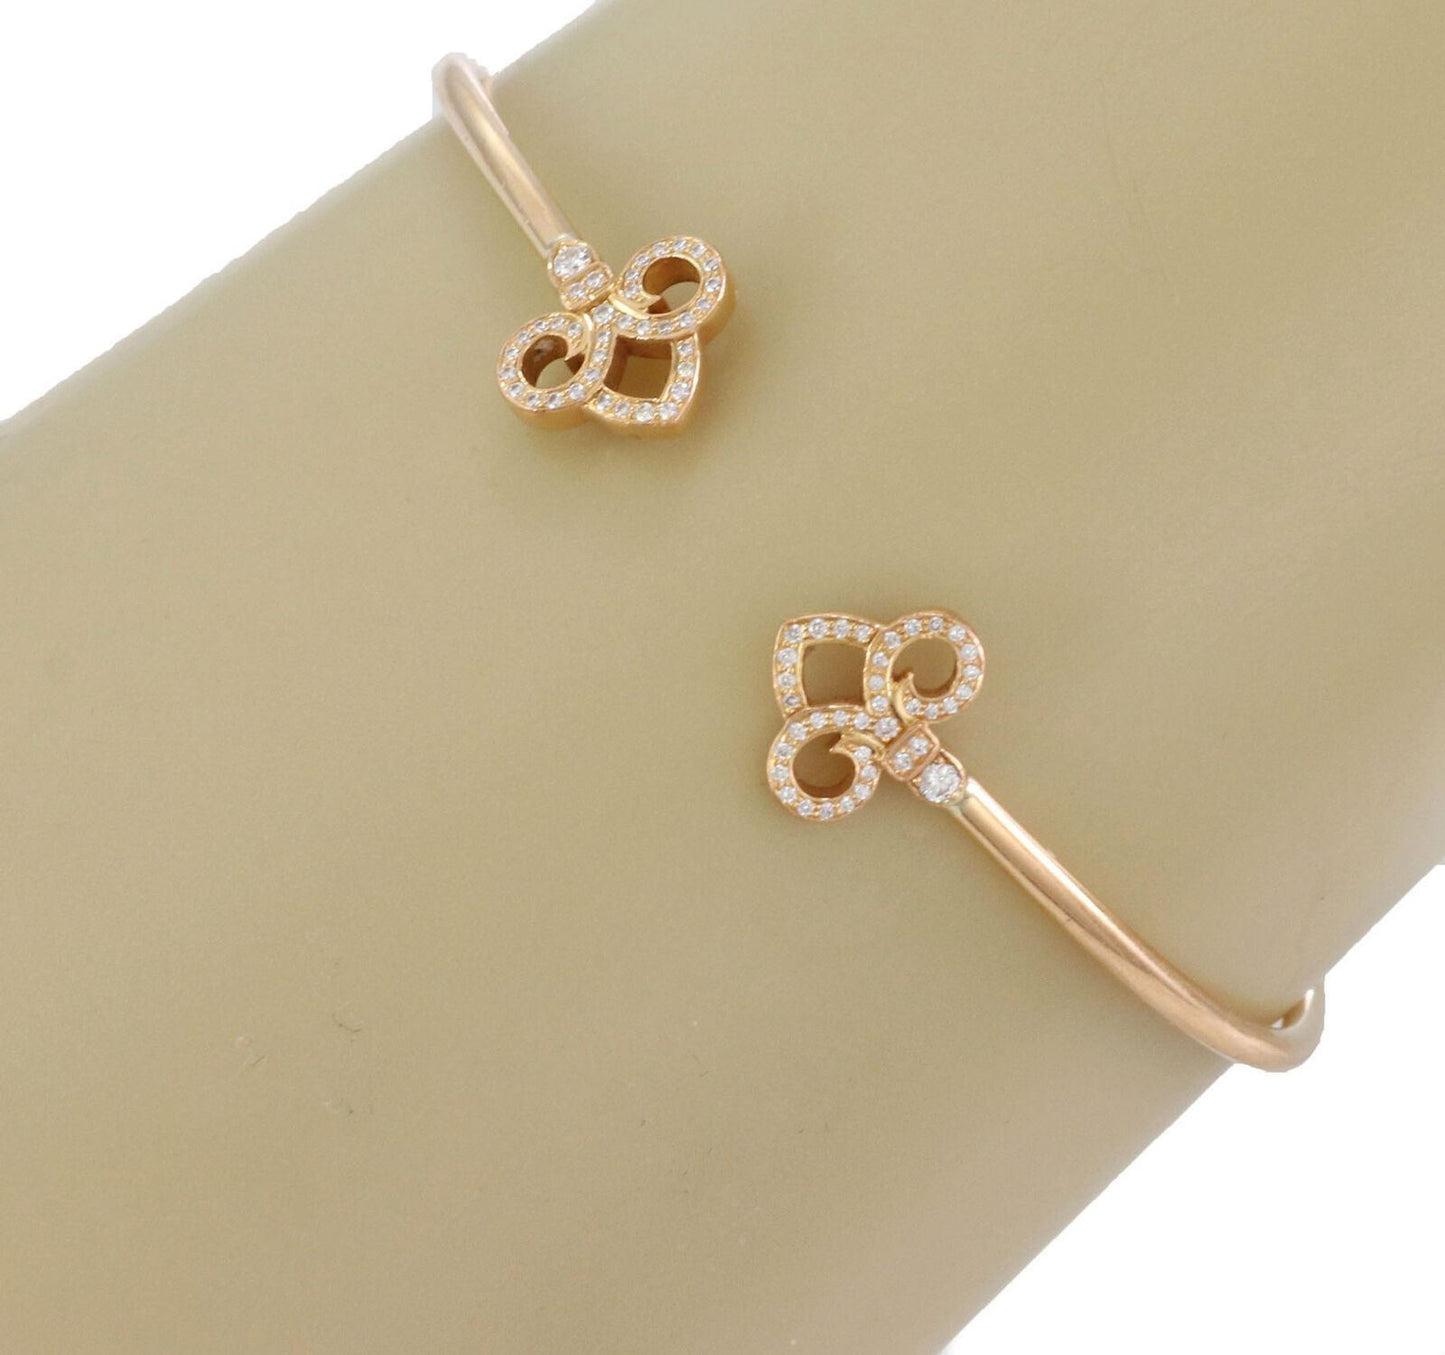 Tiffany & Co. Fleur de Lis Diamond 18k Yellow Gold Wire Cuff Bangle Bracelet | Bracelets | Bangles, Bracelets, catalog, cuffs, Designer Jewelry, Tiffany & Co. | Tiffany & Co.